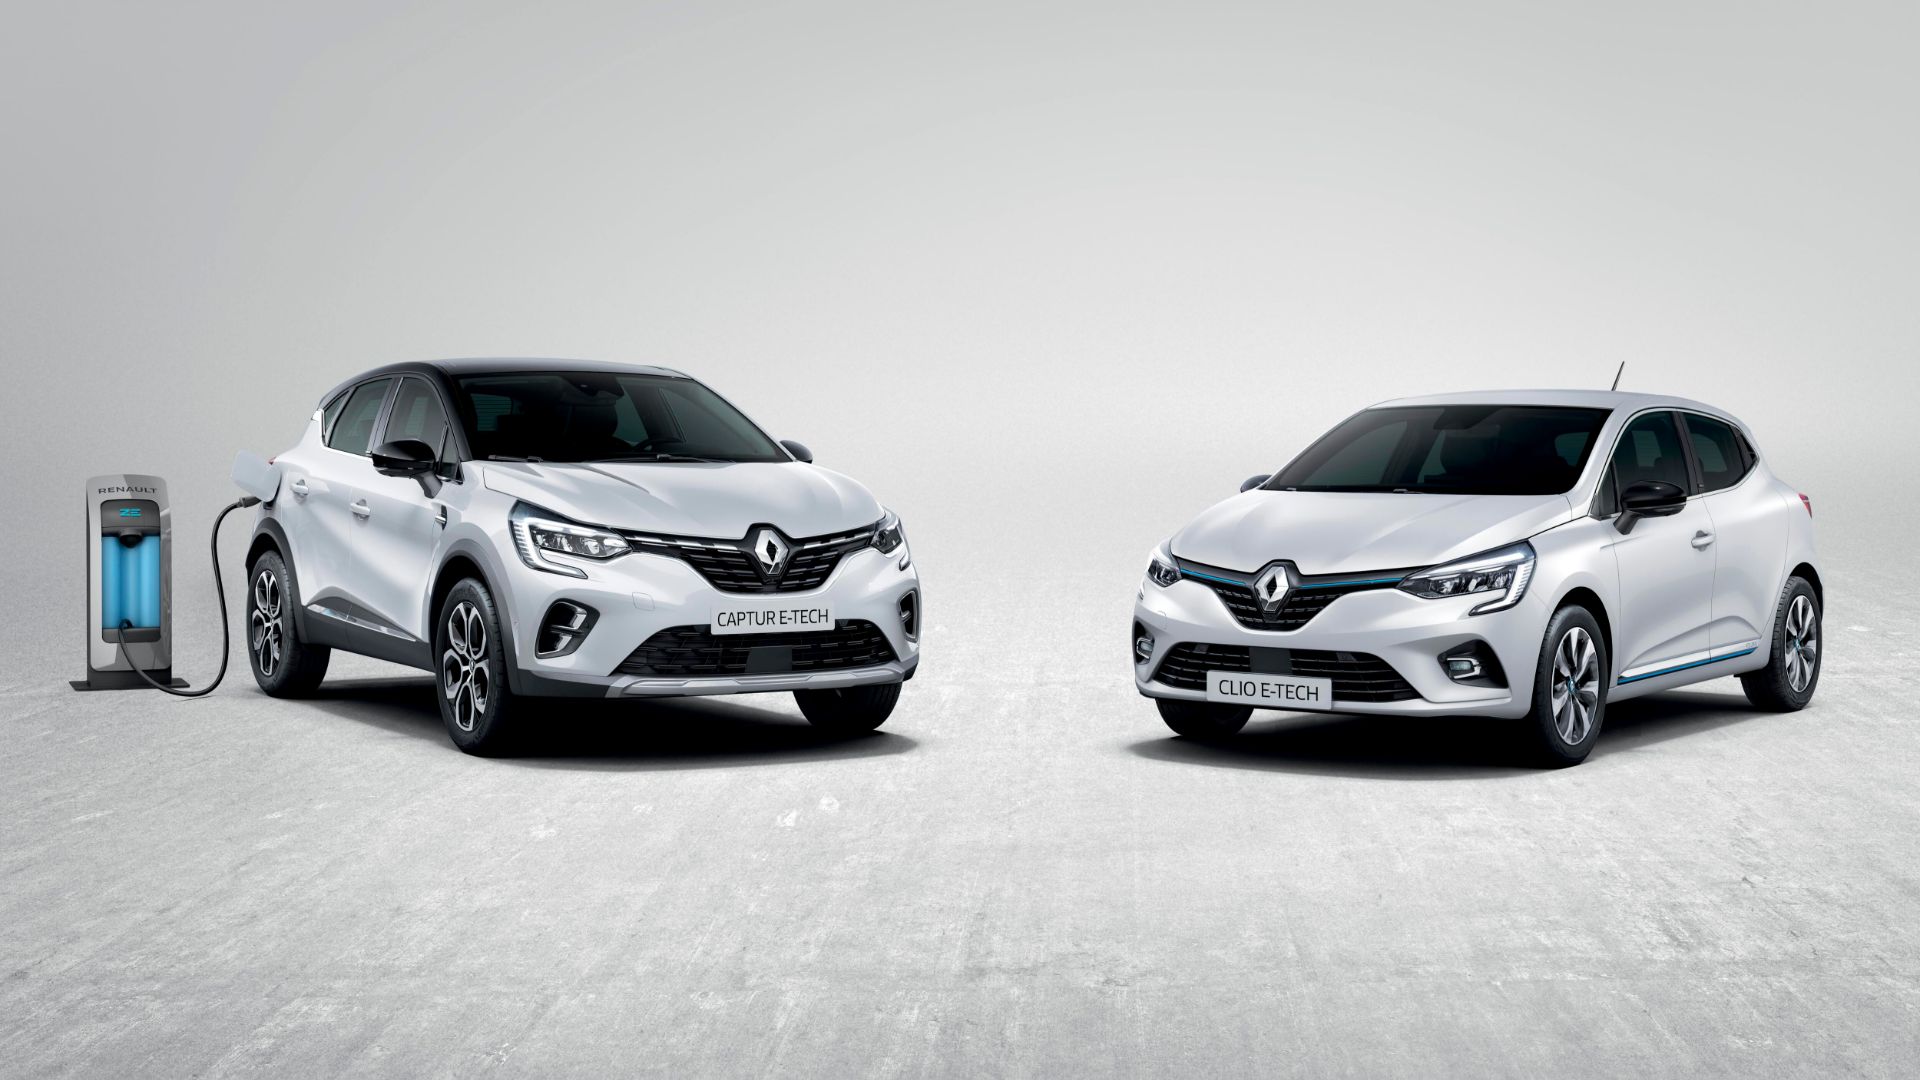 2020 Renault Clio and Captur go hybrid